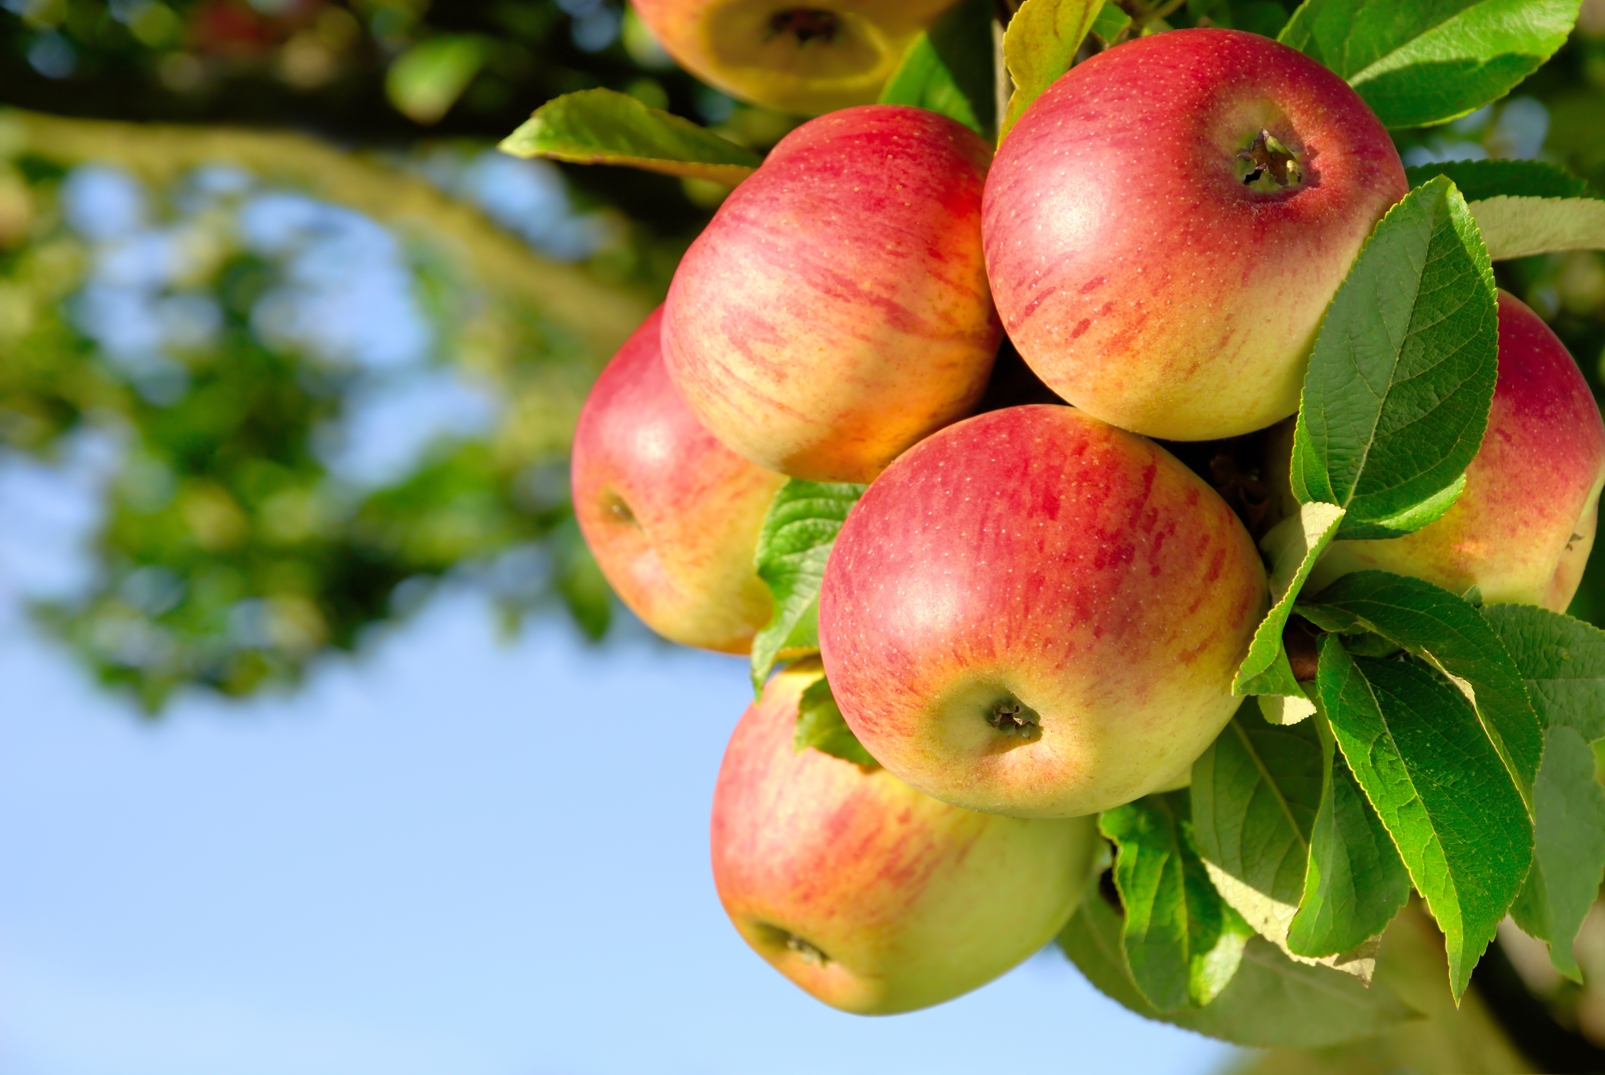 Magnettafel Pinnwand Bild Natur Apfel Äpfel Apfelbaum